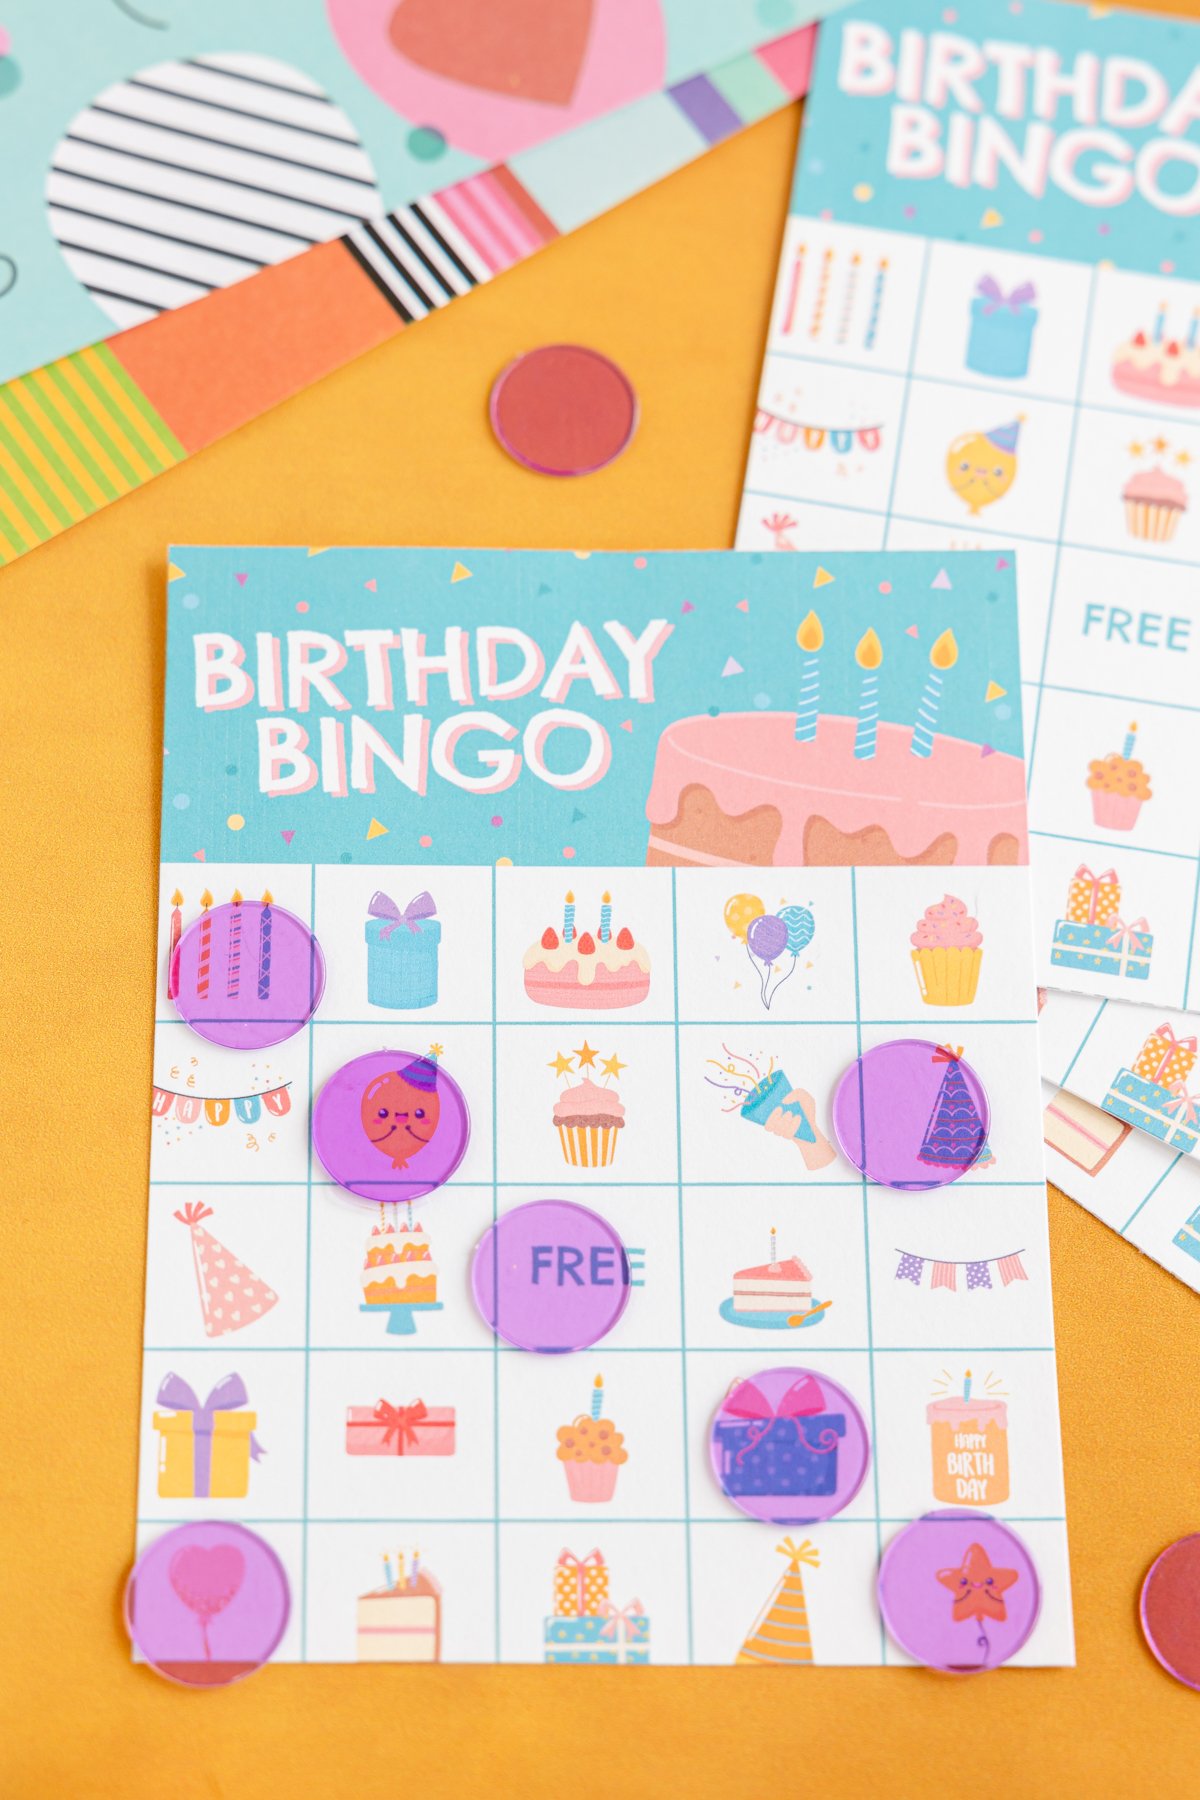 birthday bingo card with bingo markers on it